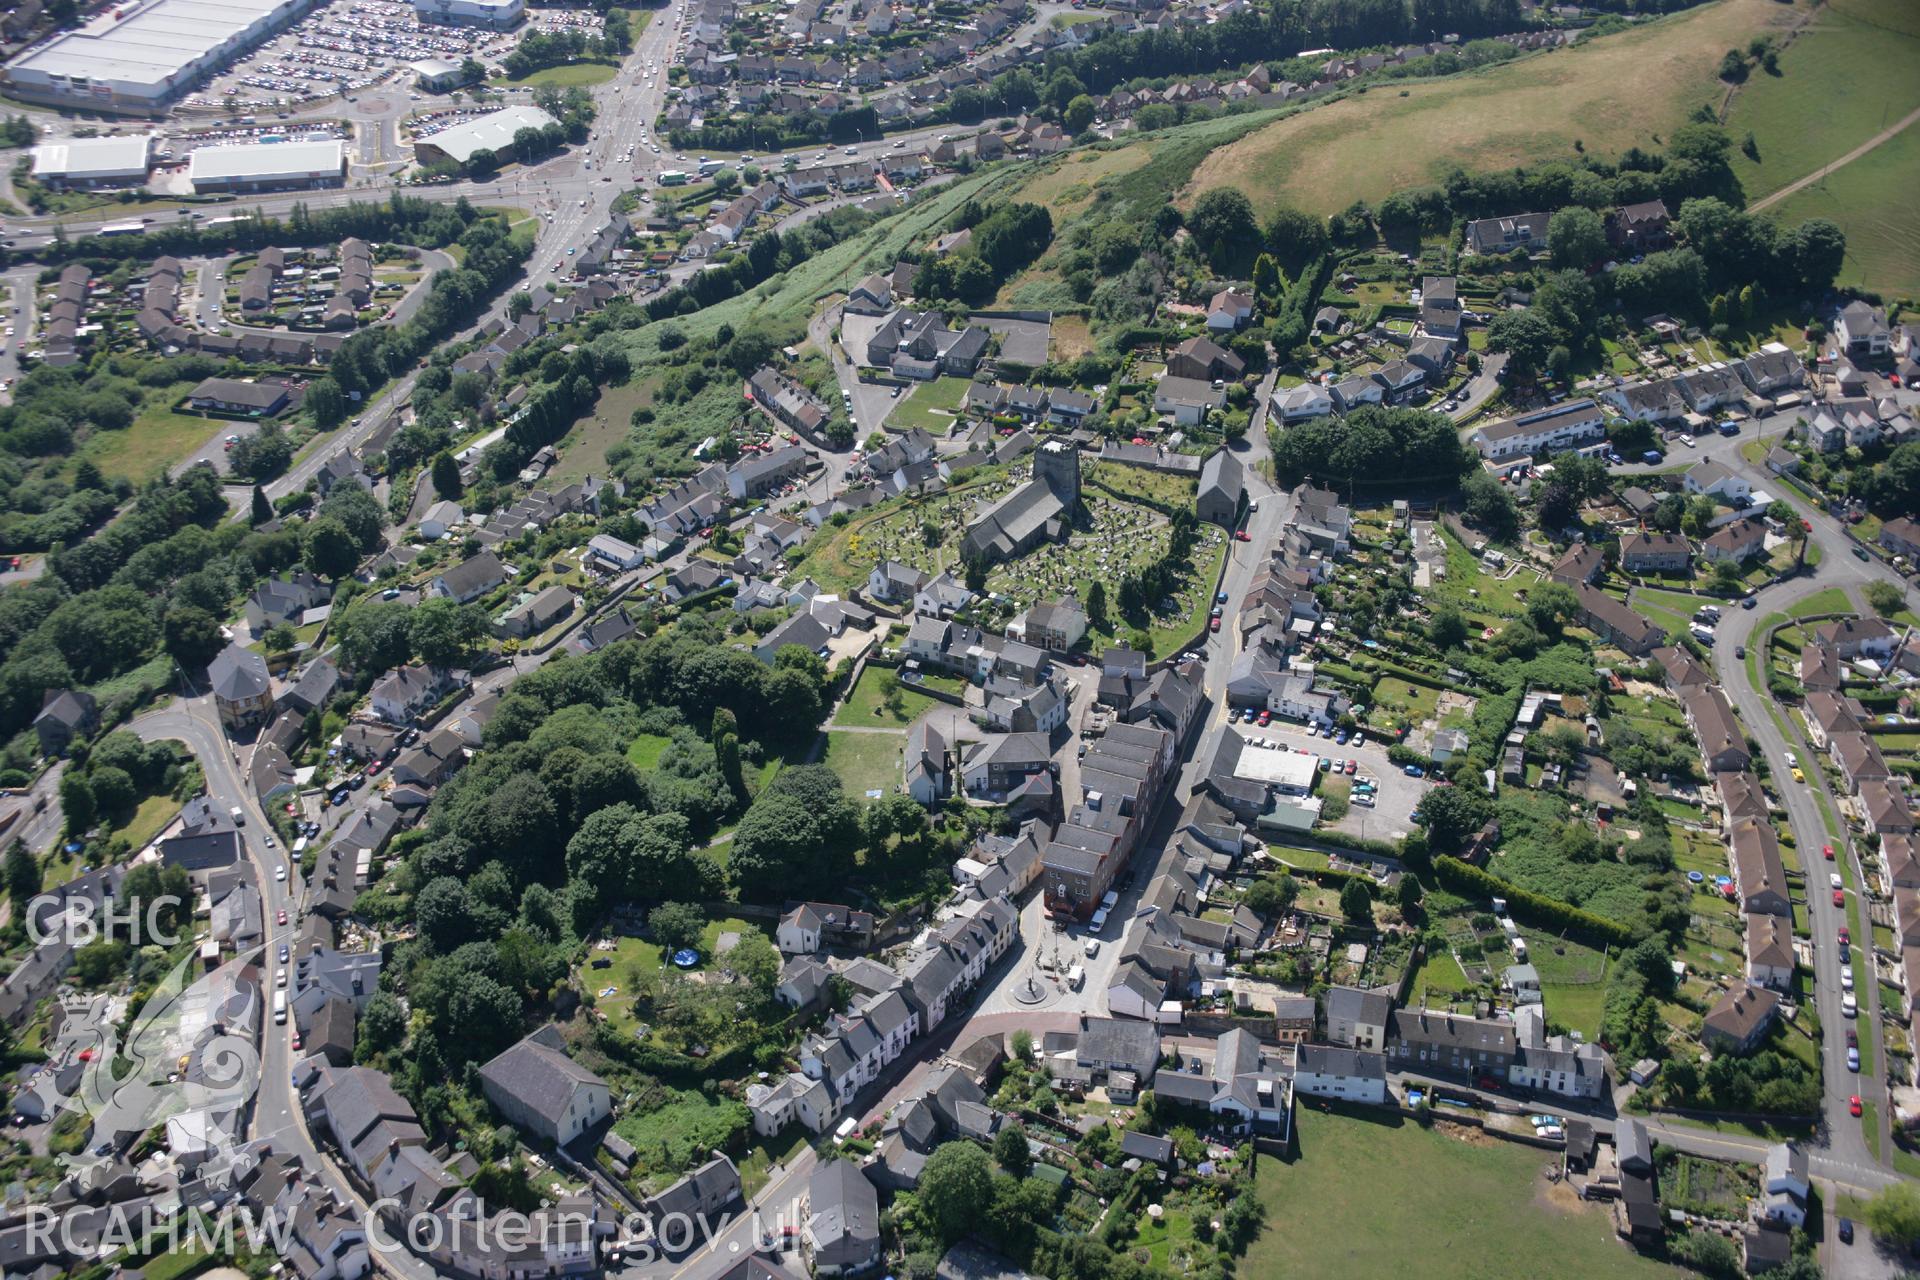 RCAHMW colour oblique aerial photograph of Llantrisant Castle. Taken on 24 July 2006 by Toby Driver.